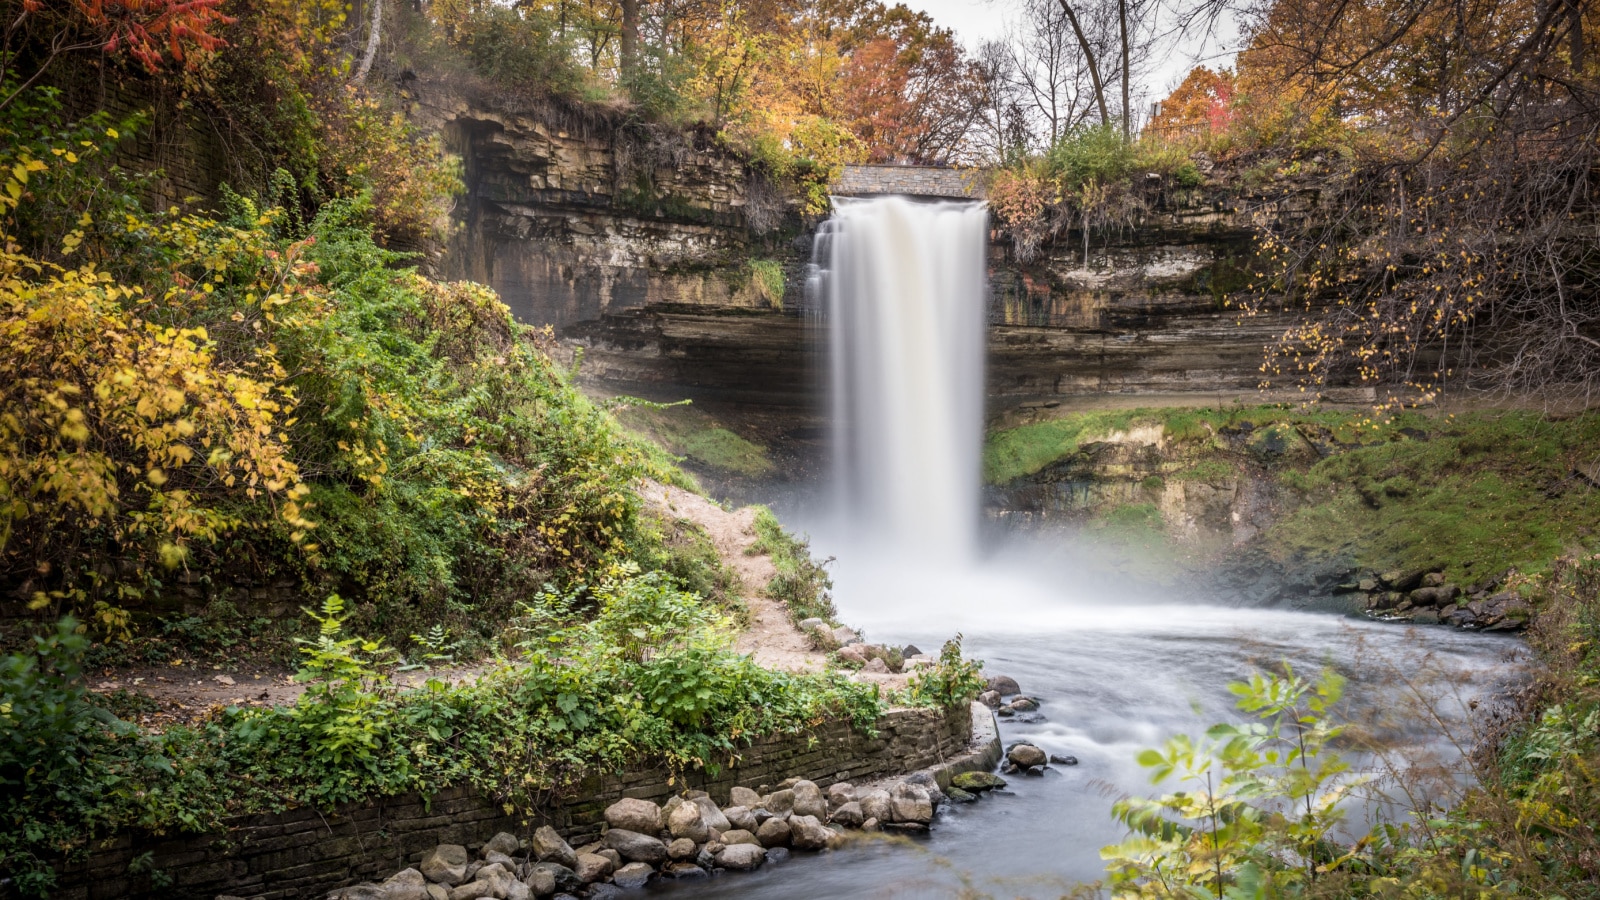 This is the Minnehaha Falls in Minneapolis, Minnesota